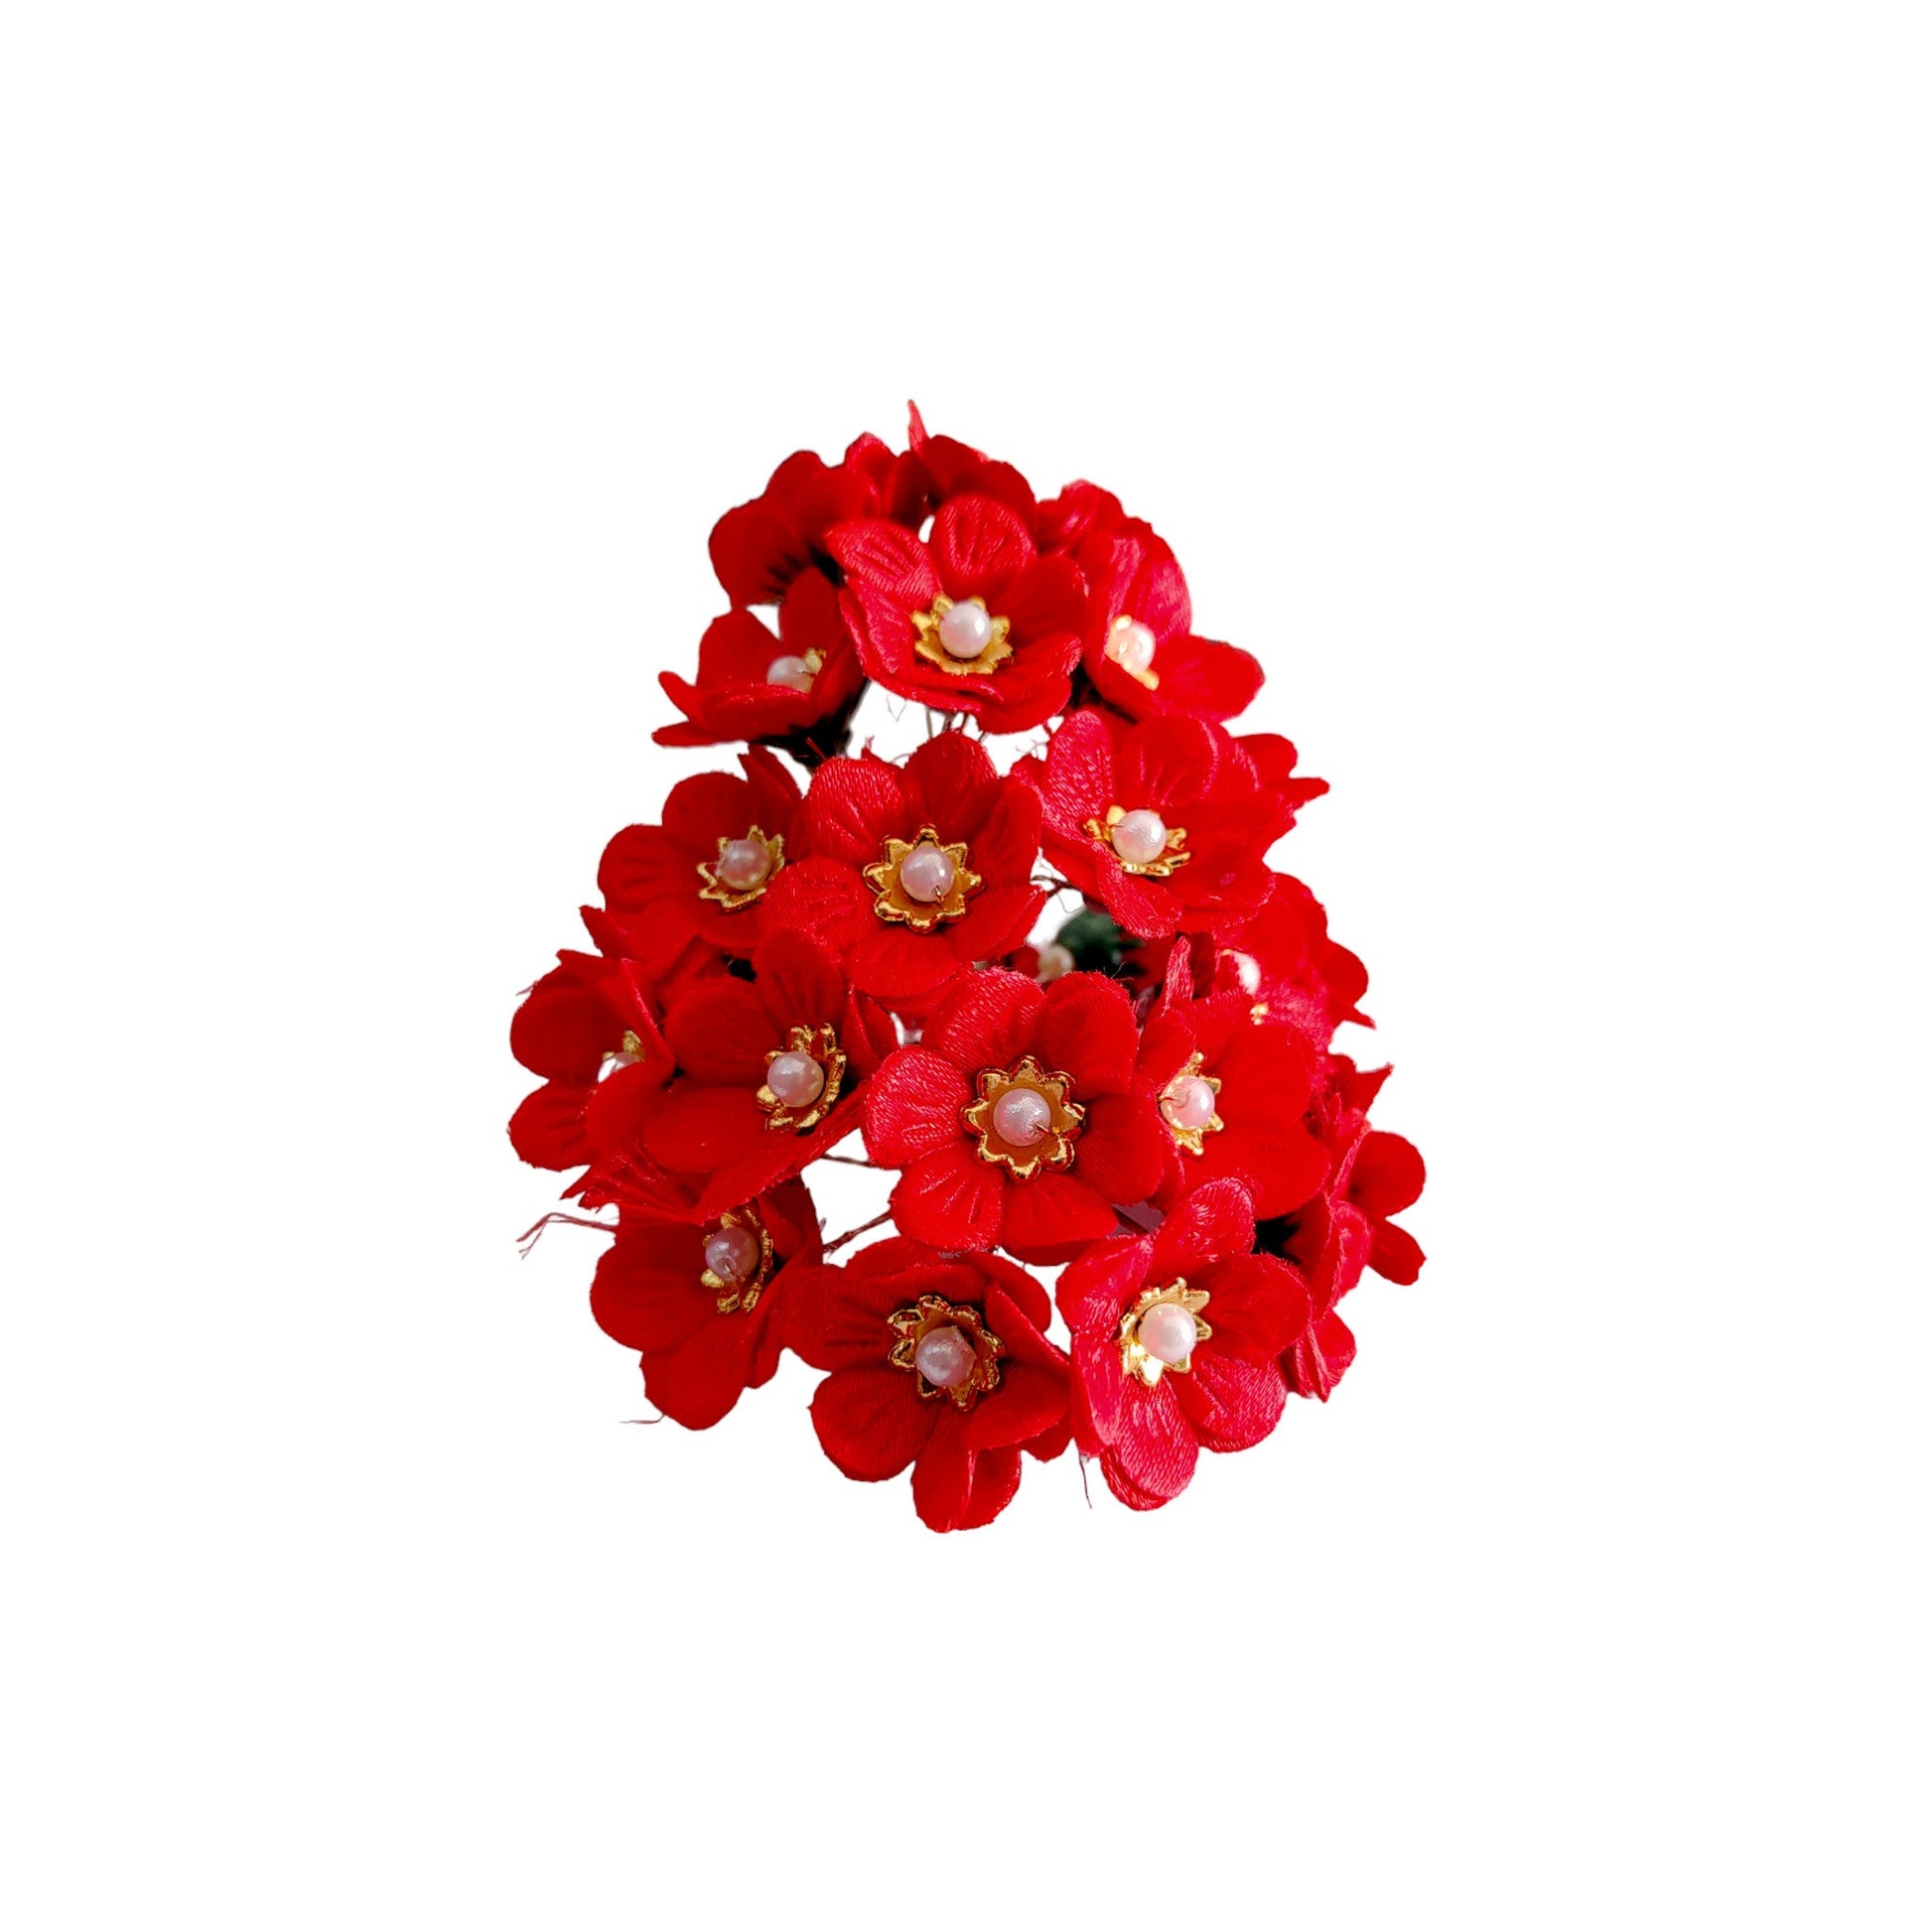 Indian Petals Decorative Artificial Primrose Fabric Flower for Decor, Craft or Textile, 60Pcs -11134, Red